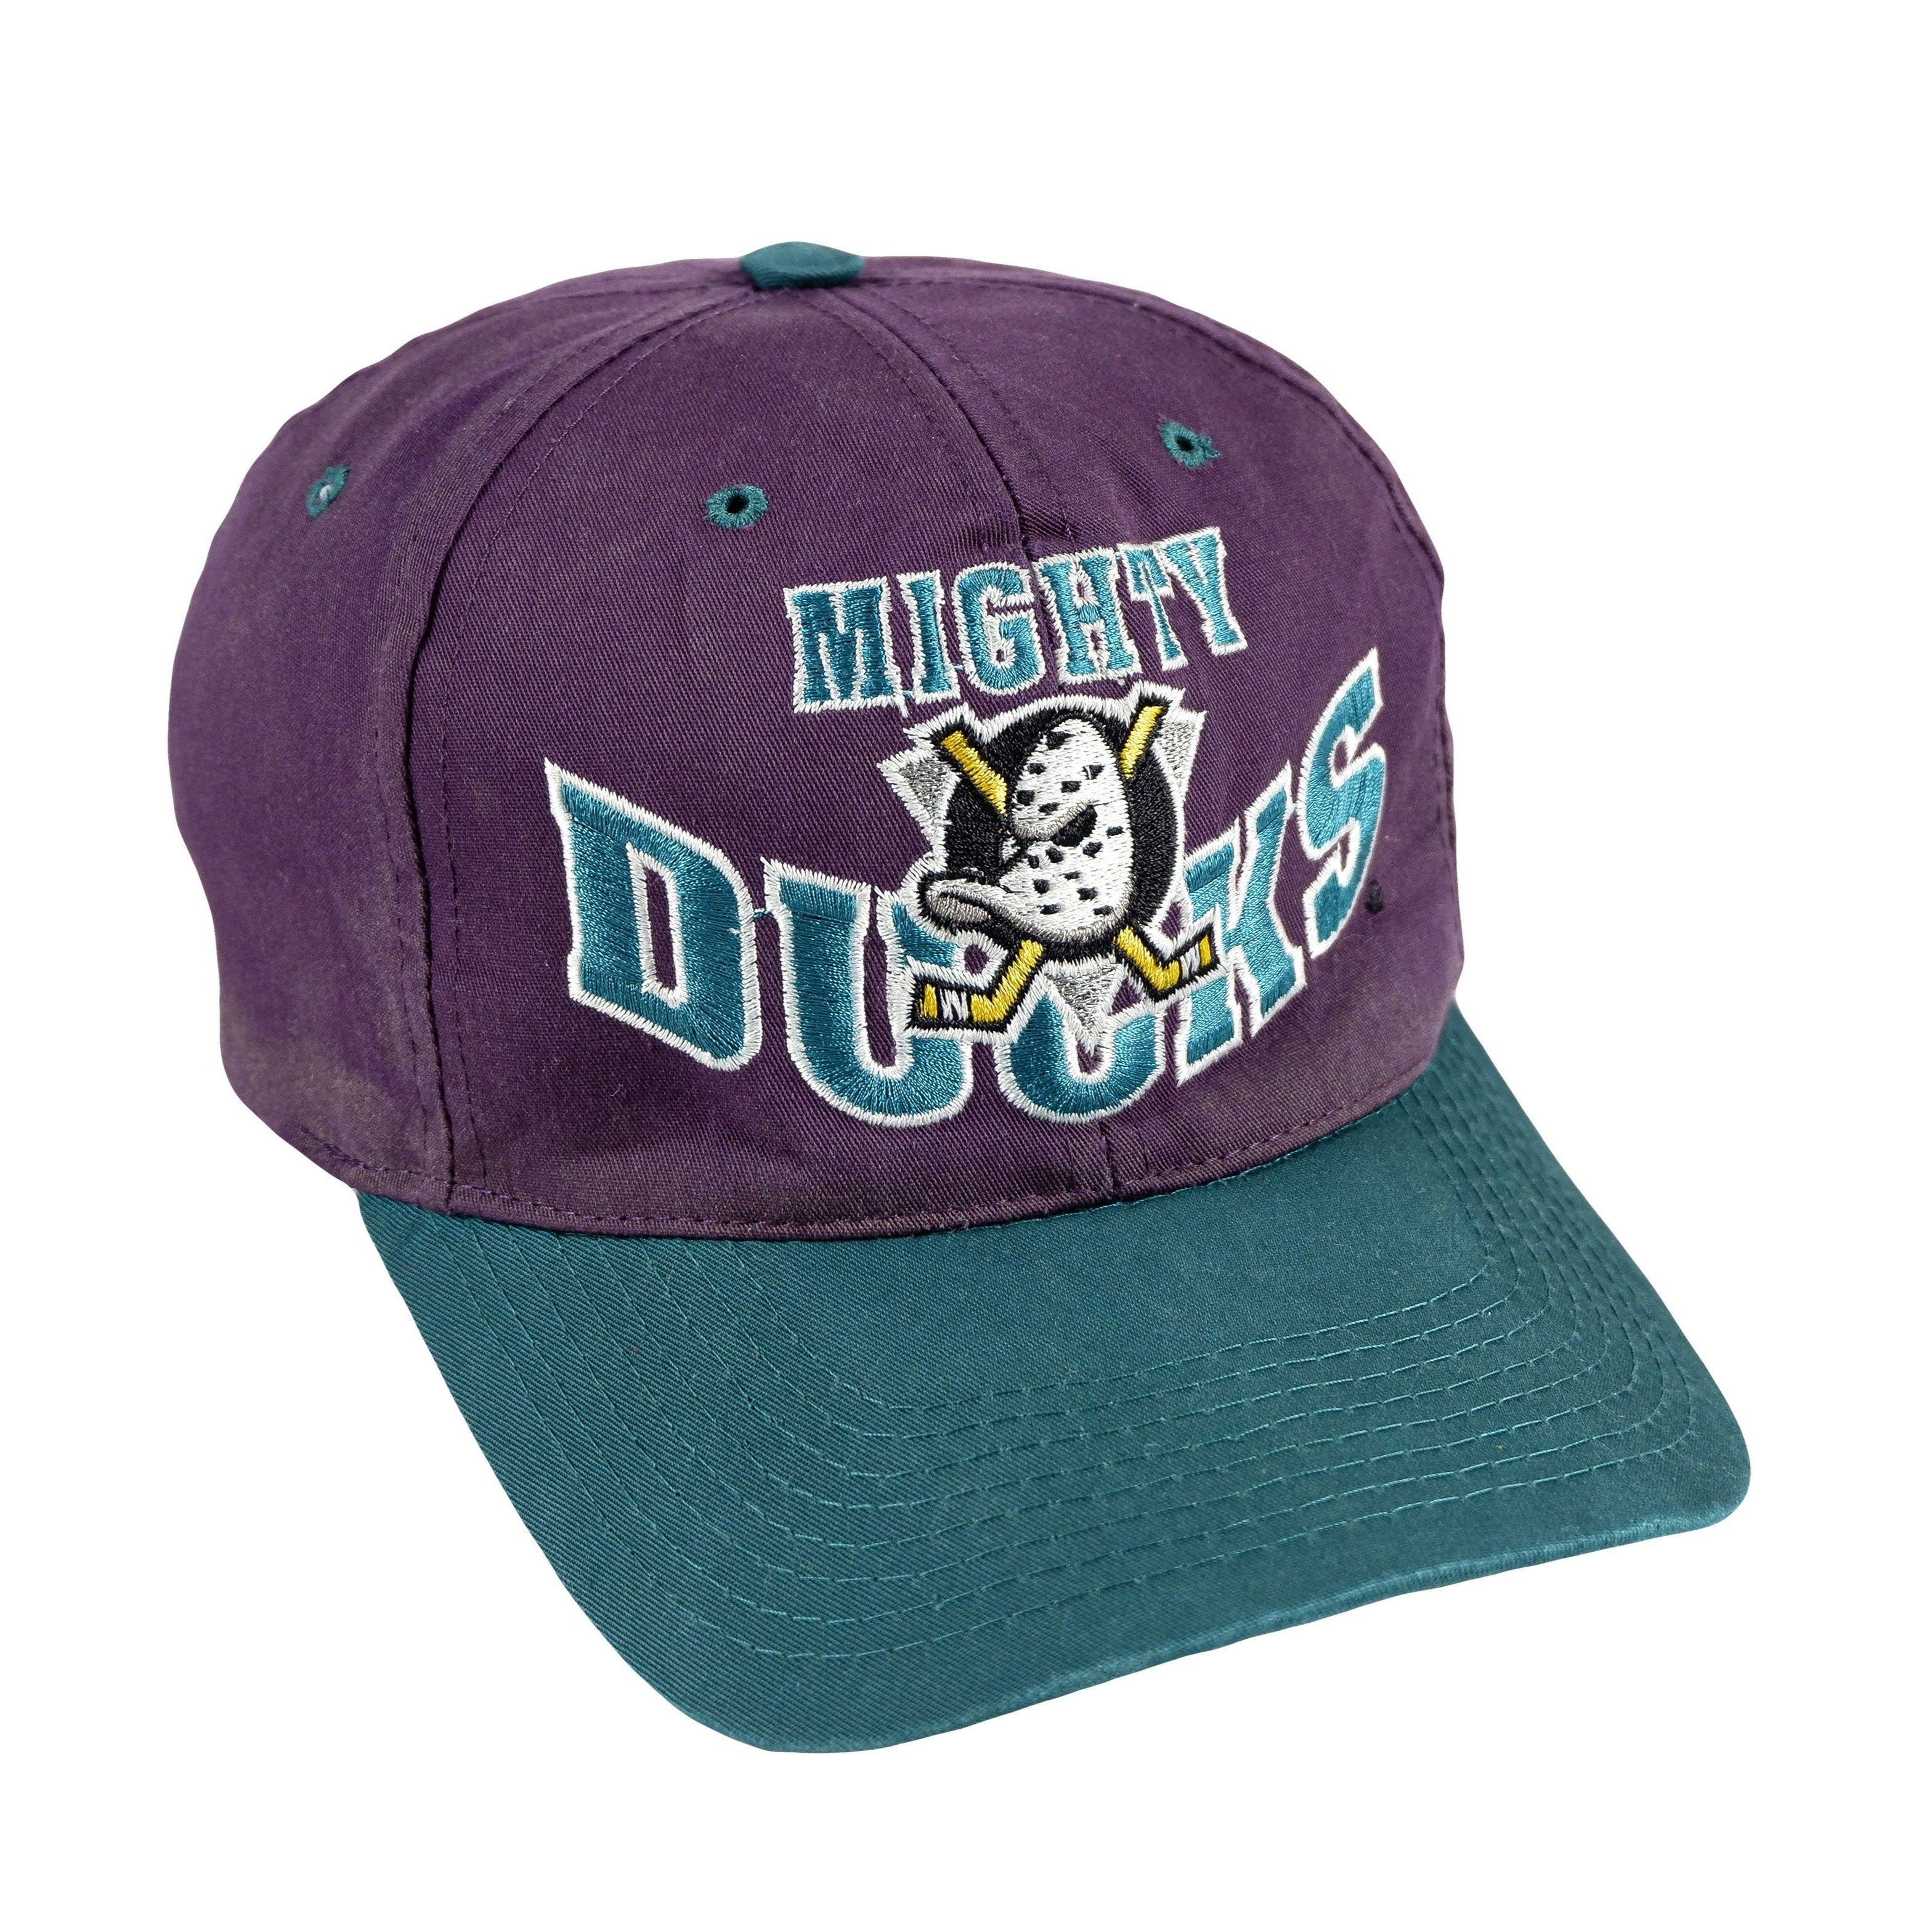 Vintage NHL Anaheim Mighty Ducks AJD Snapback Hat Cap NHL Hockey